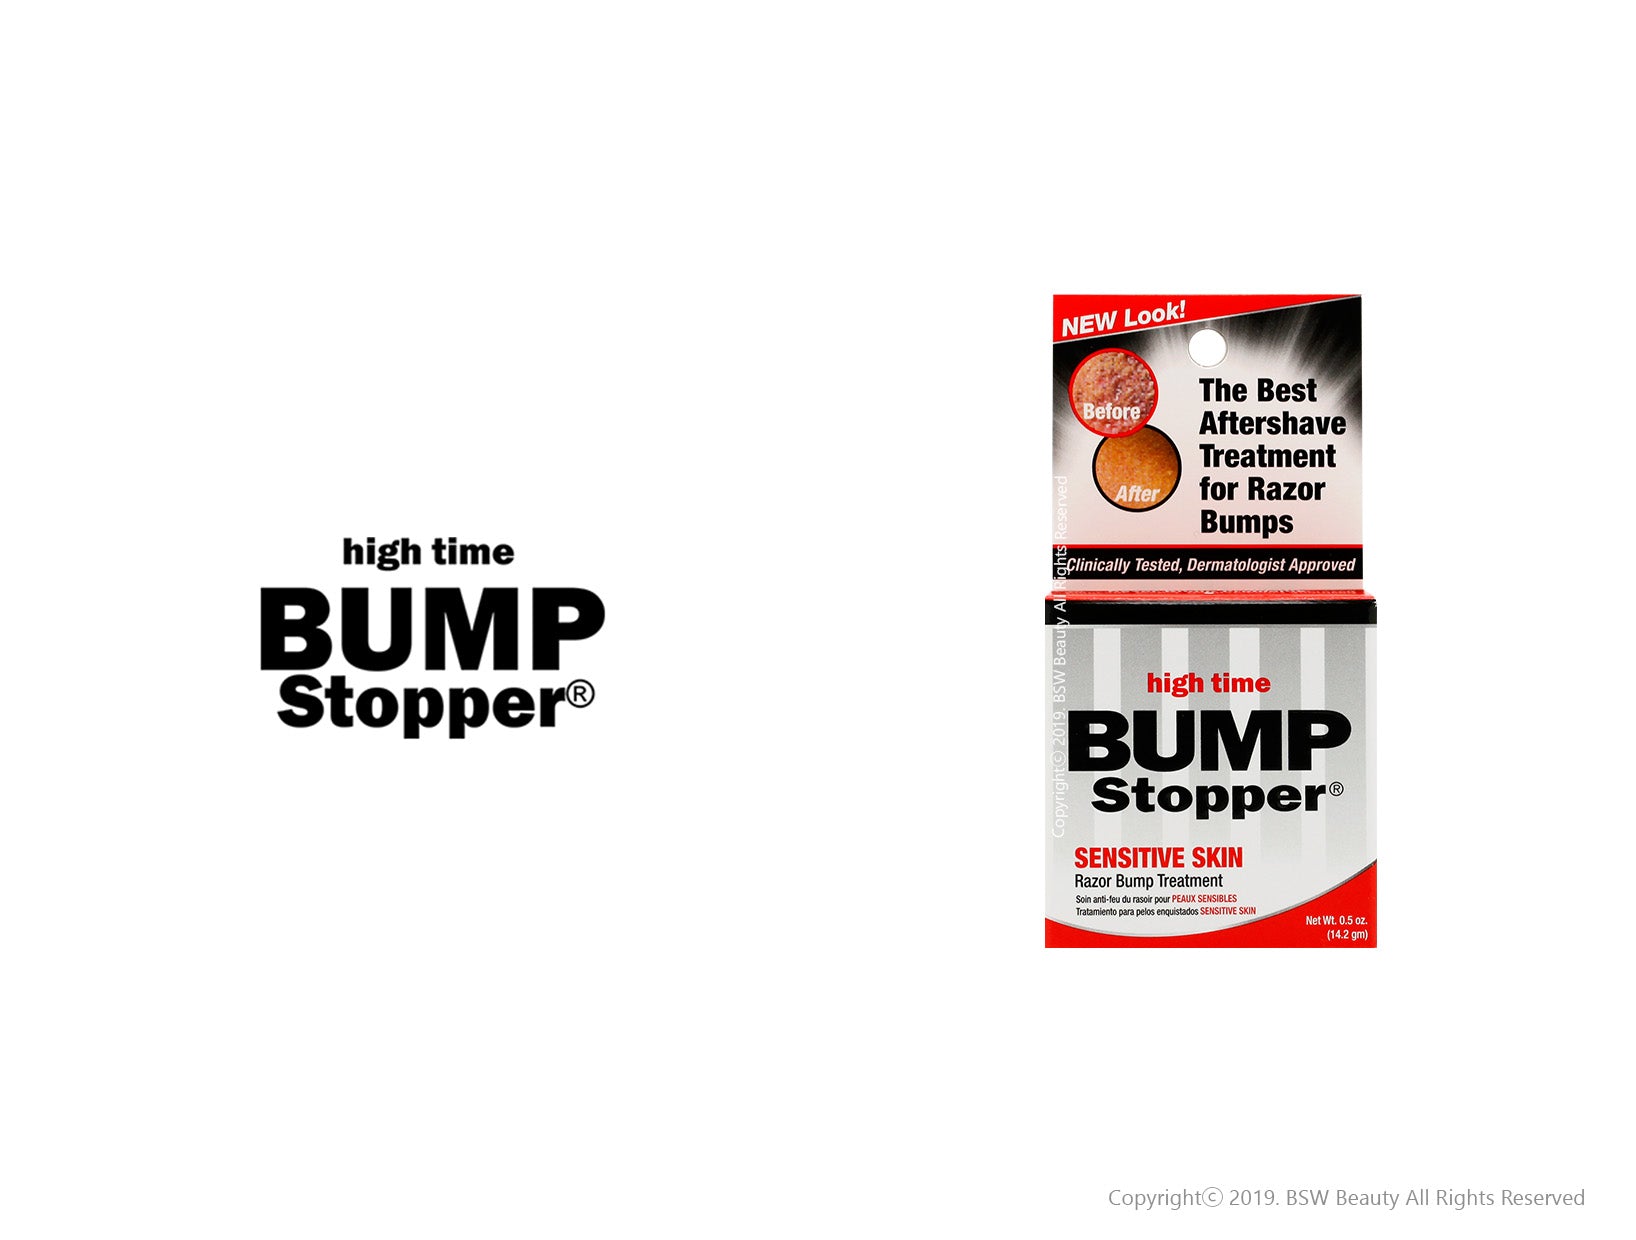 HIGH TIME BUMP STOPPER SENSITIVE SKIN RAZOR BUMP TREATMENT 0.5oz